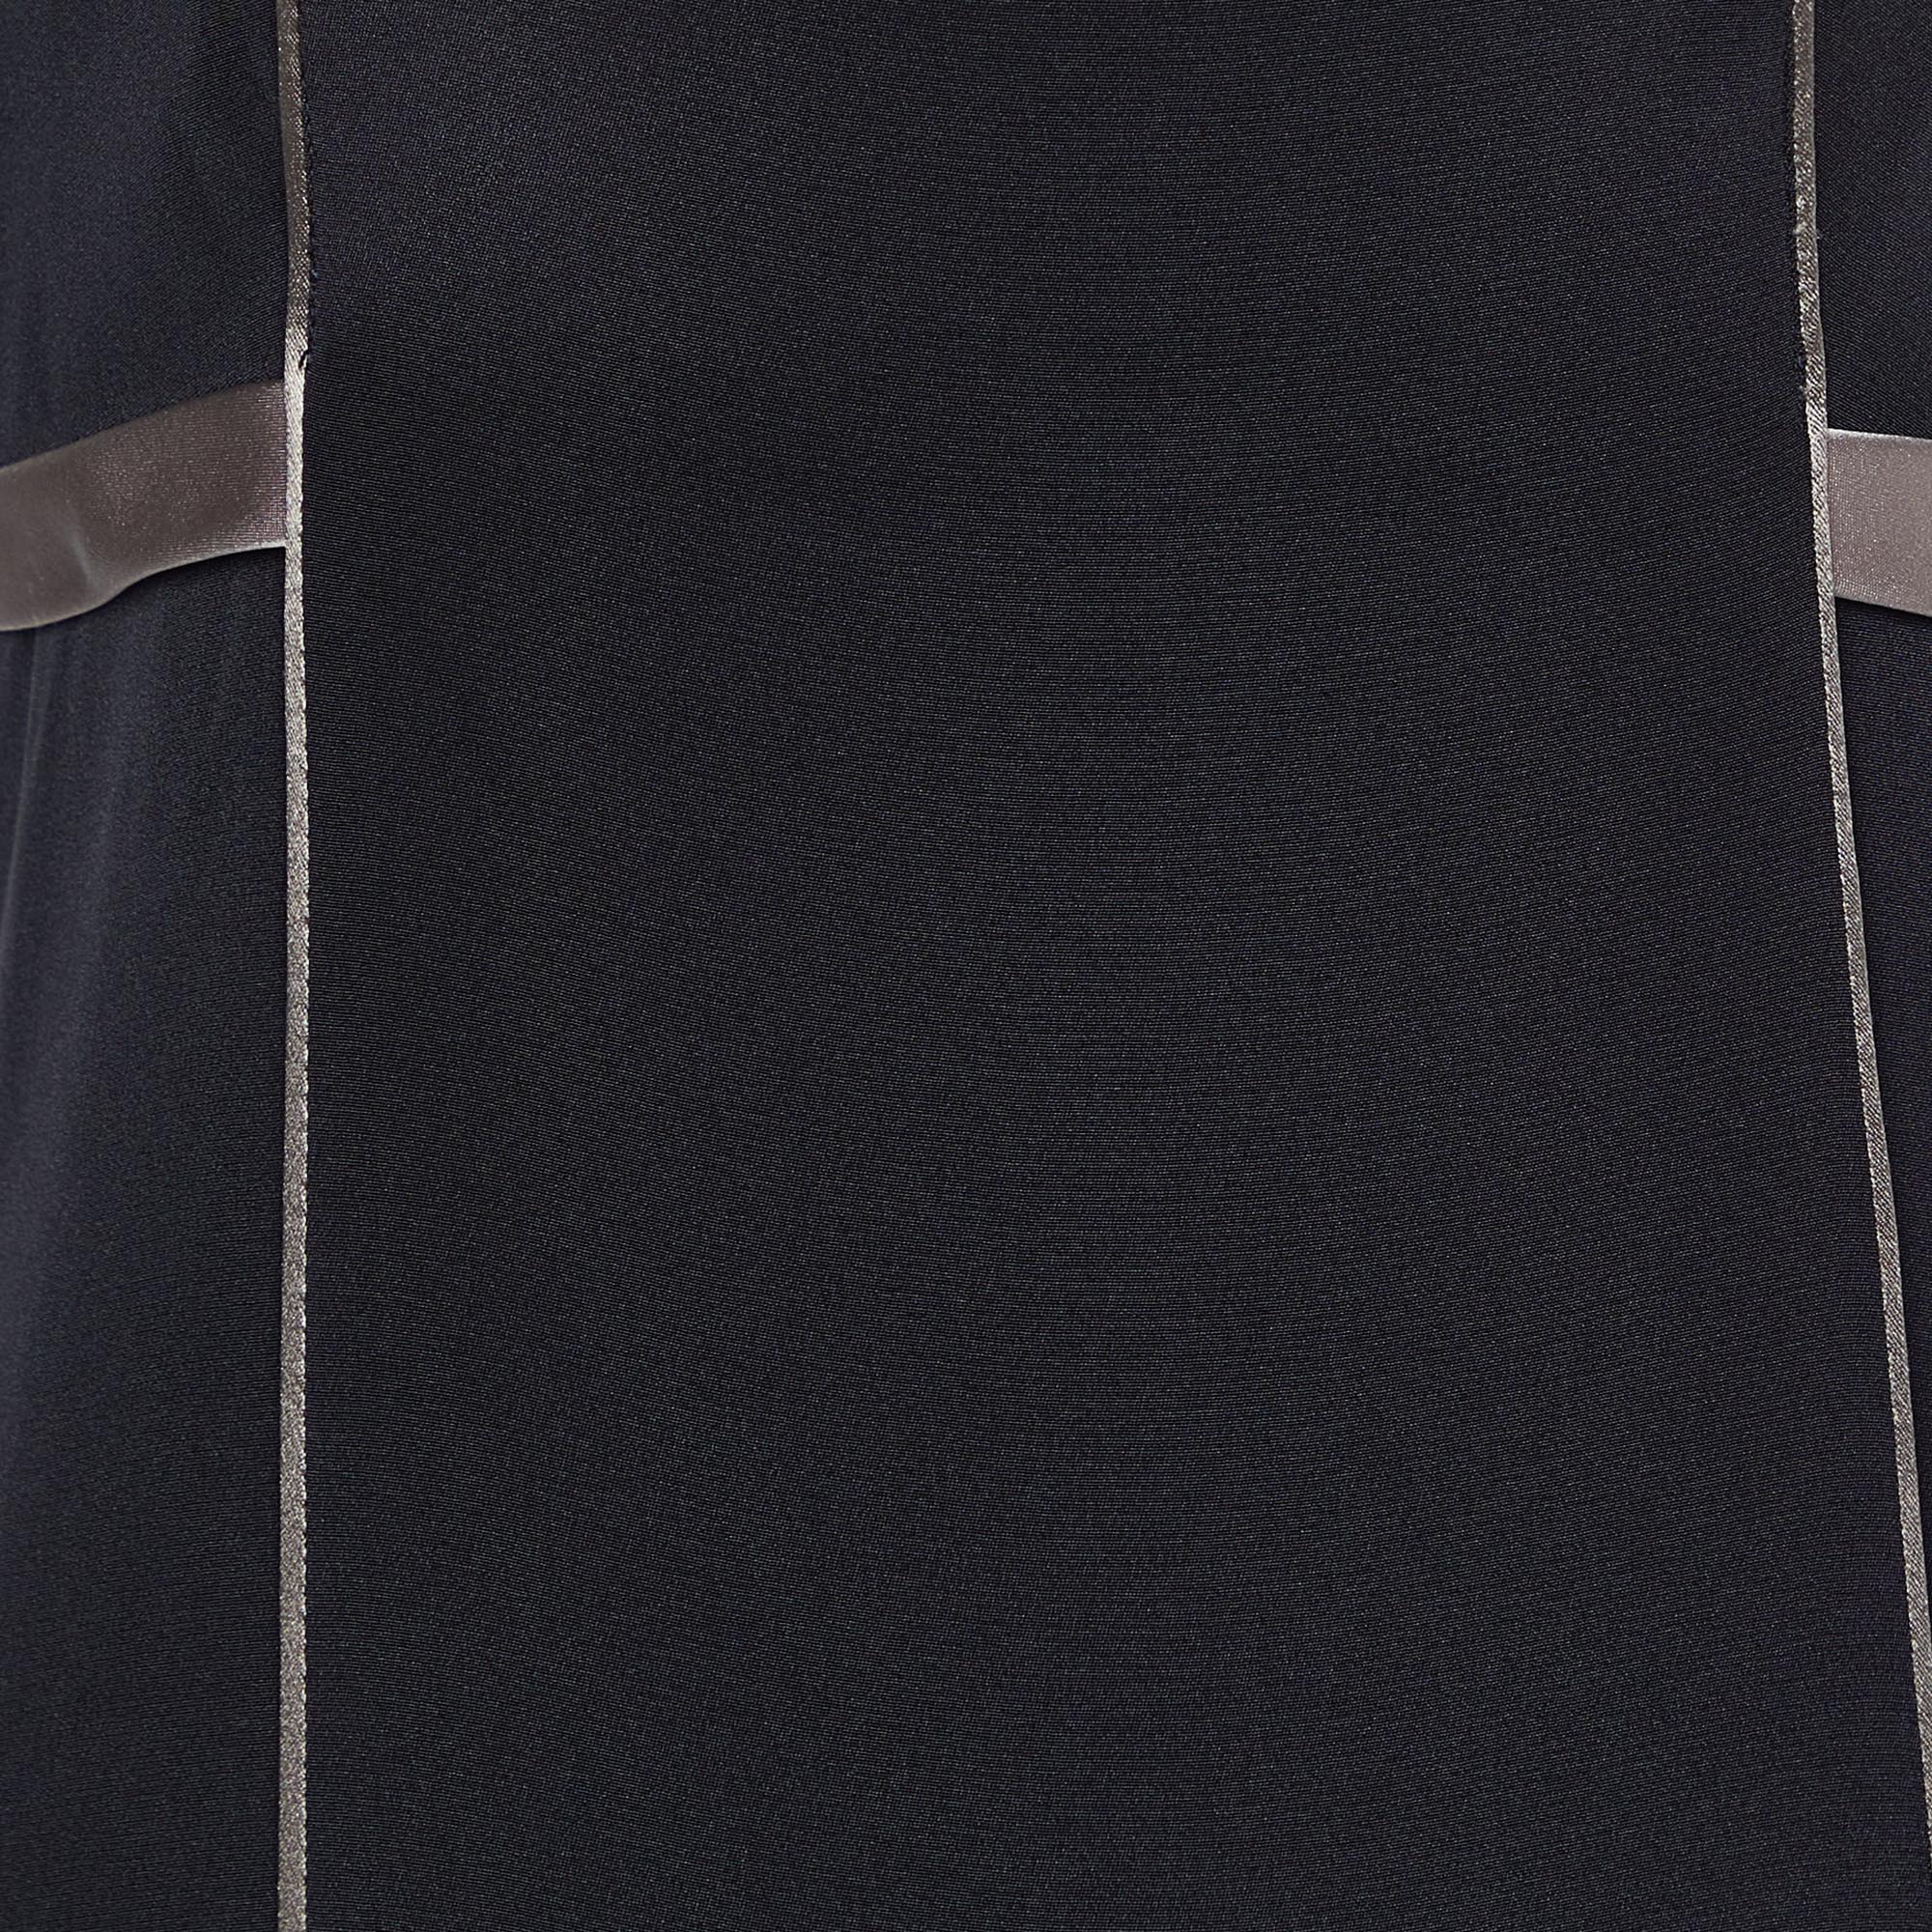 Balenciaga Black Silk Satin Contrast Trim Detail Sleeveless Maxi Dress M